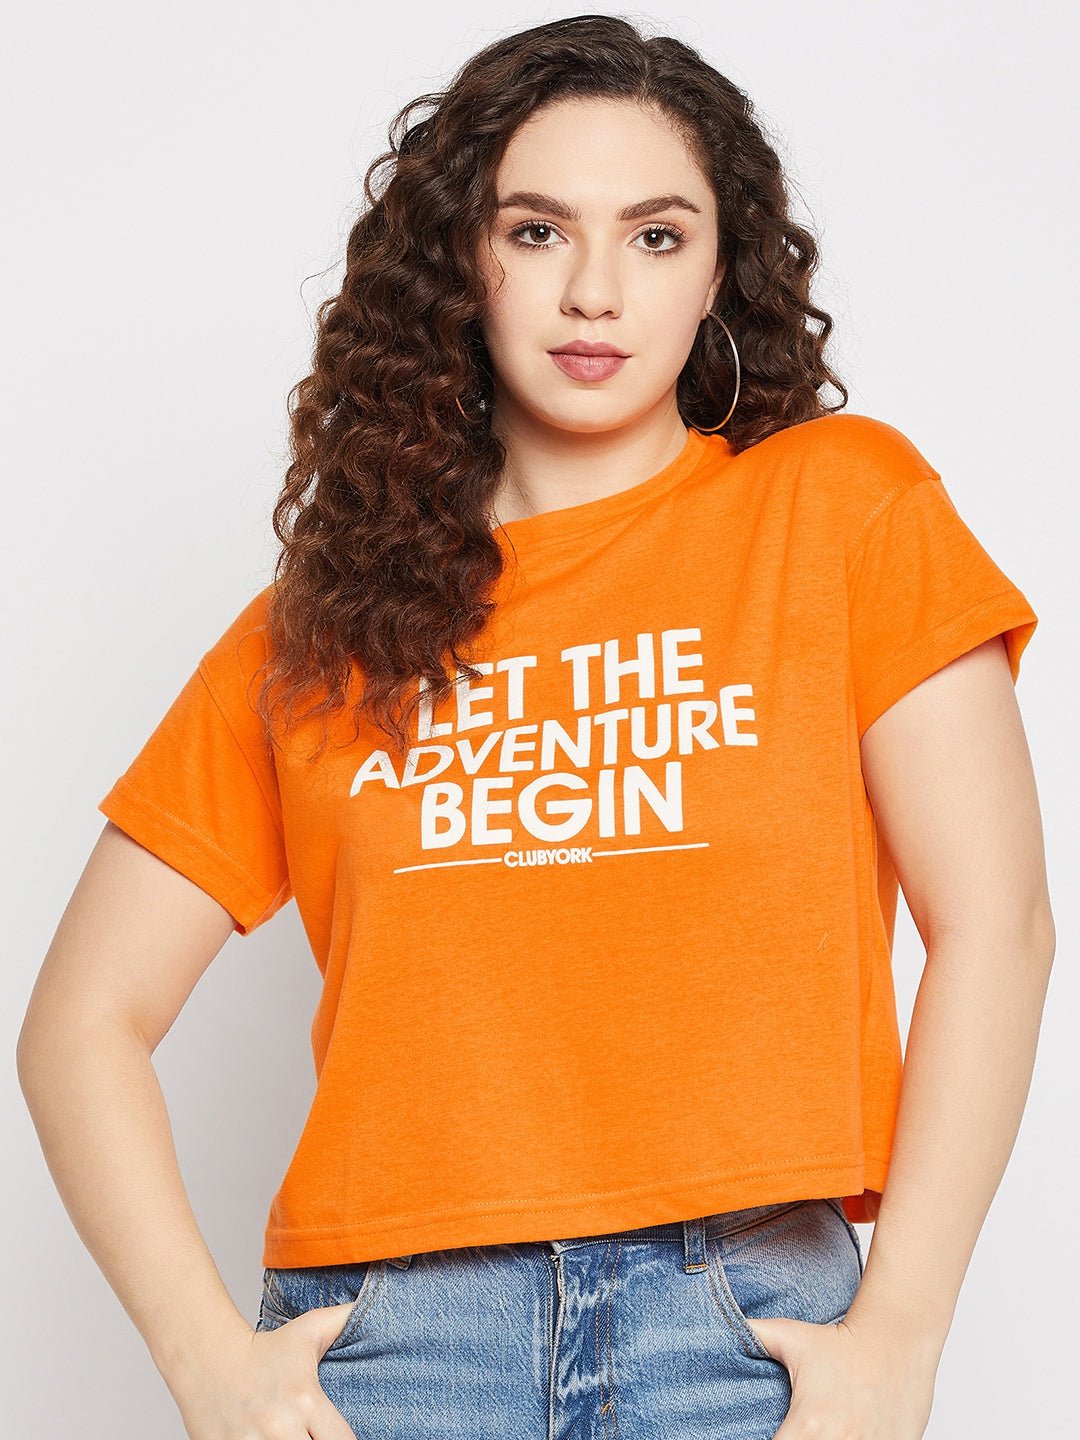 Orange Round T-shirt - clubyork